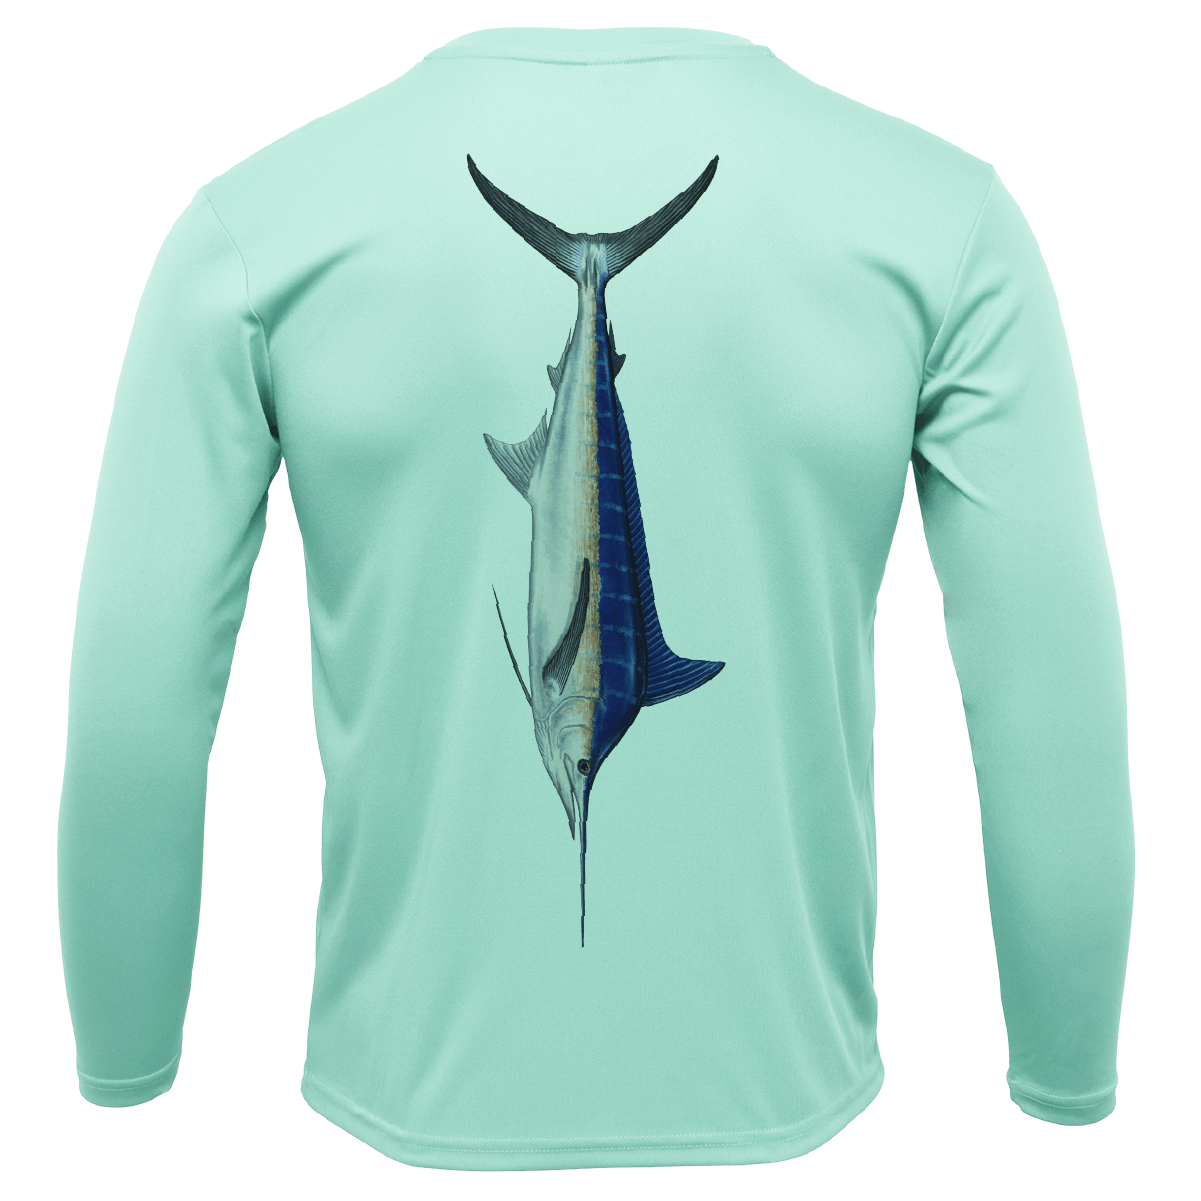 Key West, fl Marlin Long Sleeve UPF 50+ Dry-Fit Shirt in Ice Blue | Size Medium